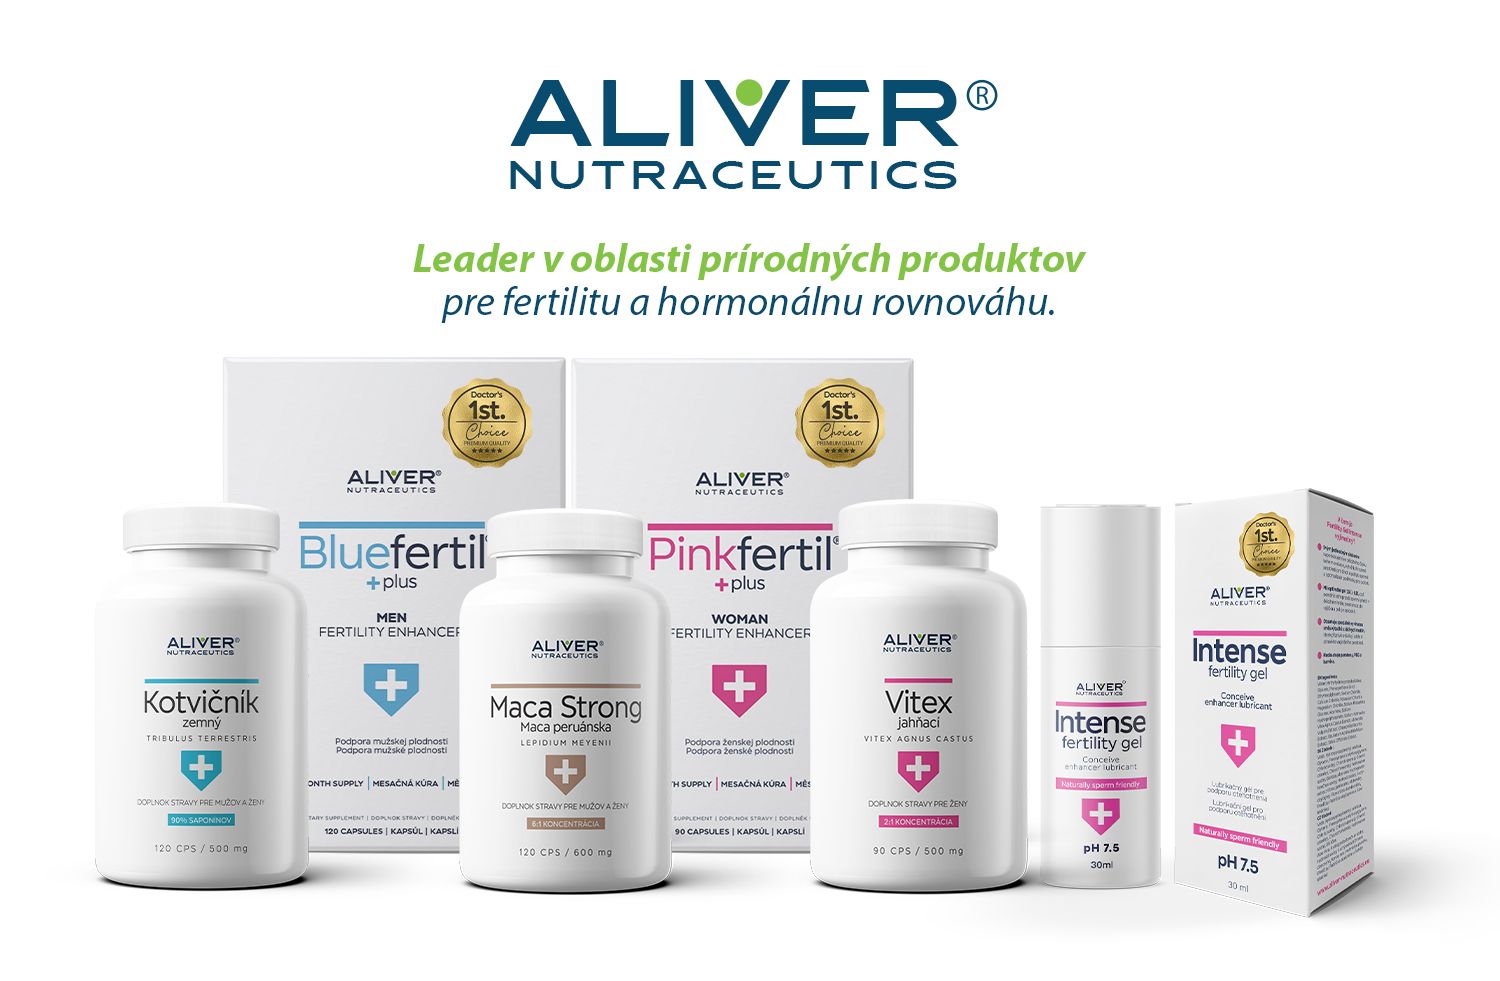 Aliver nutraceutics